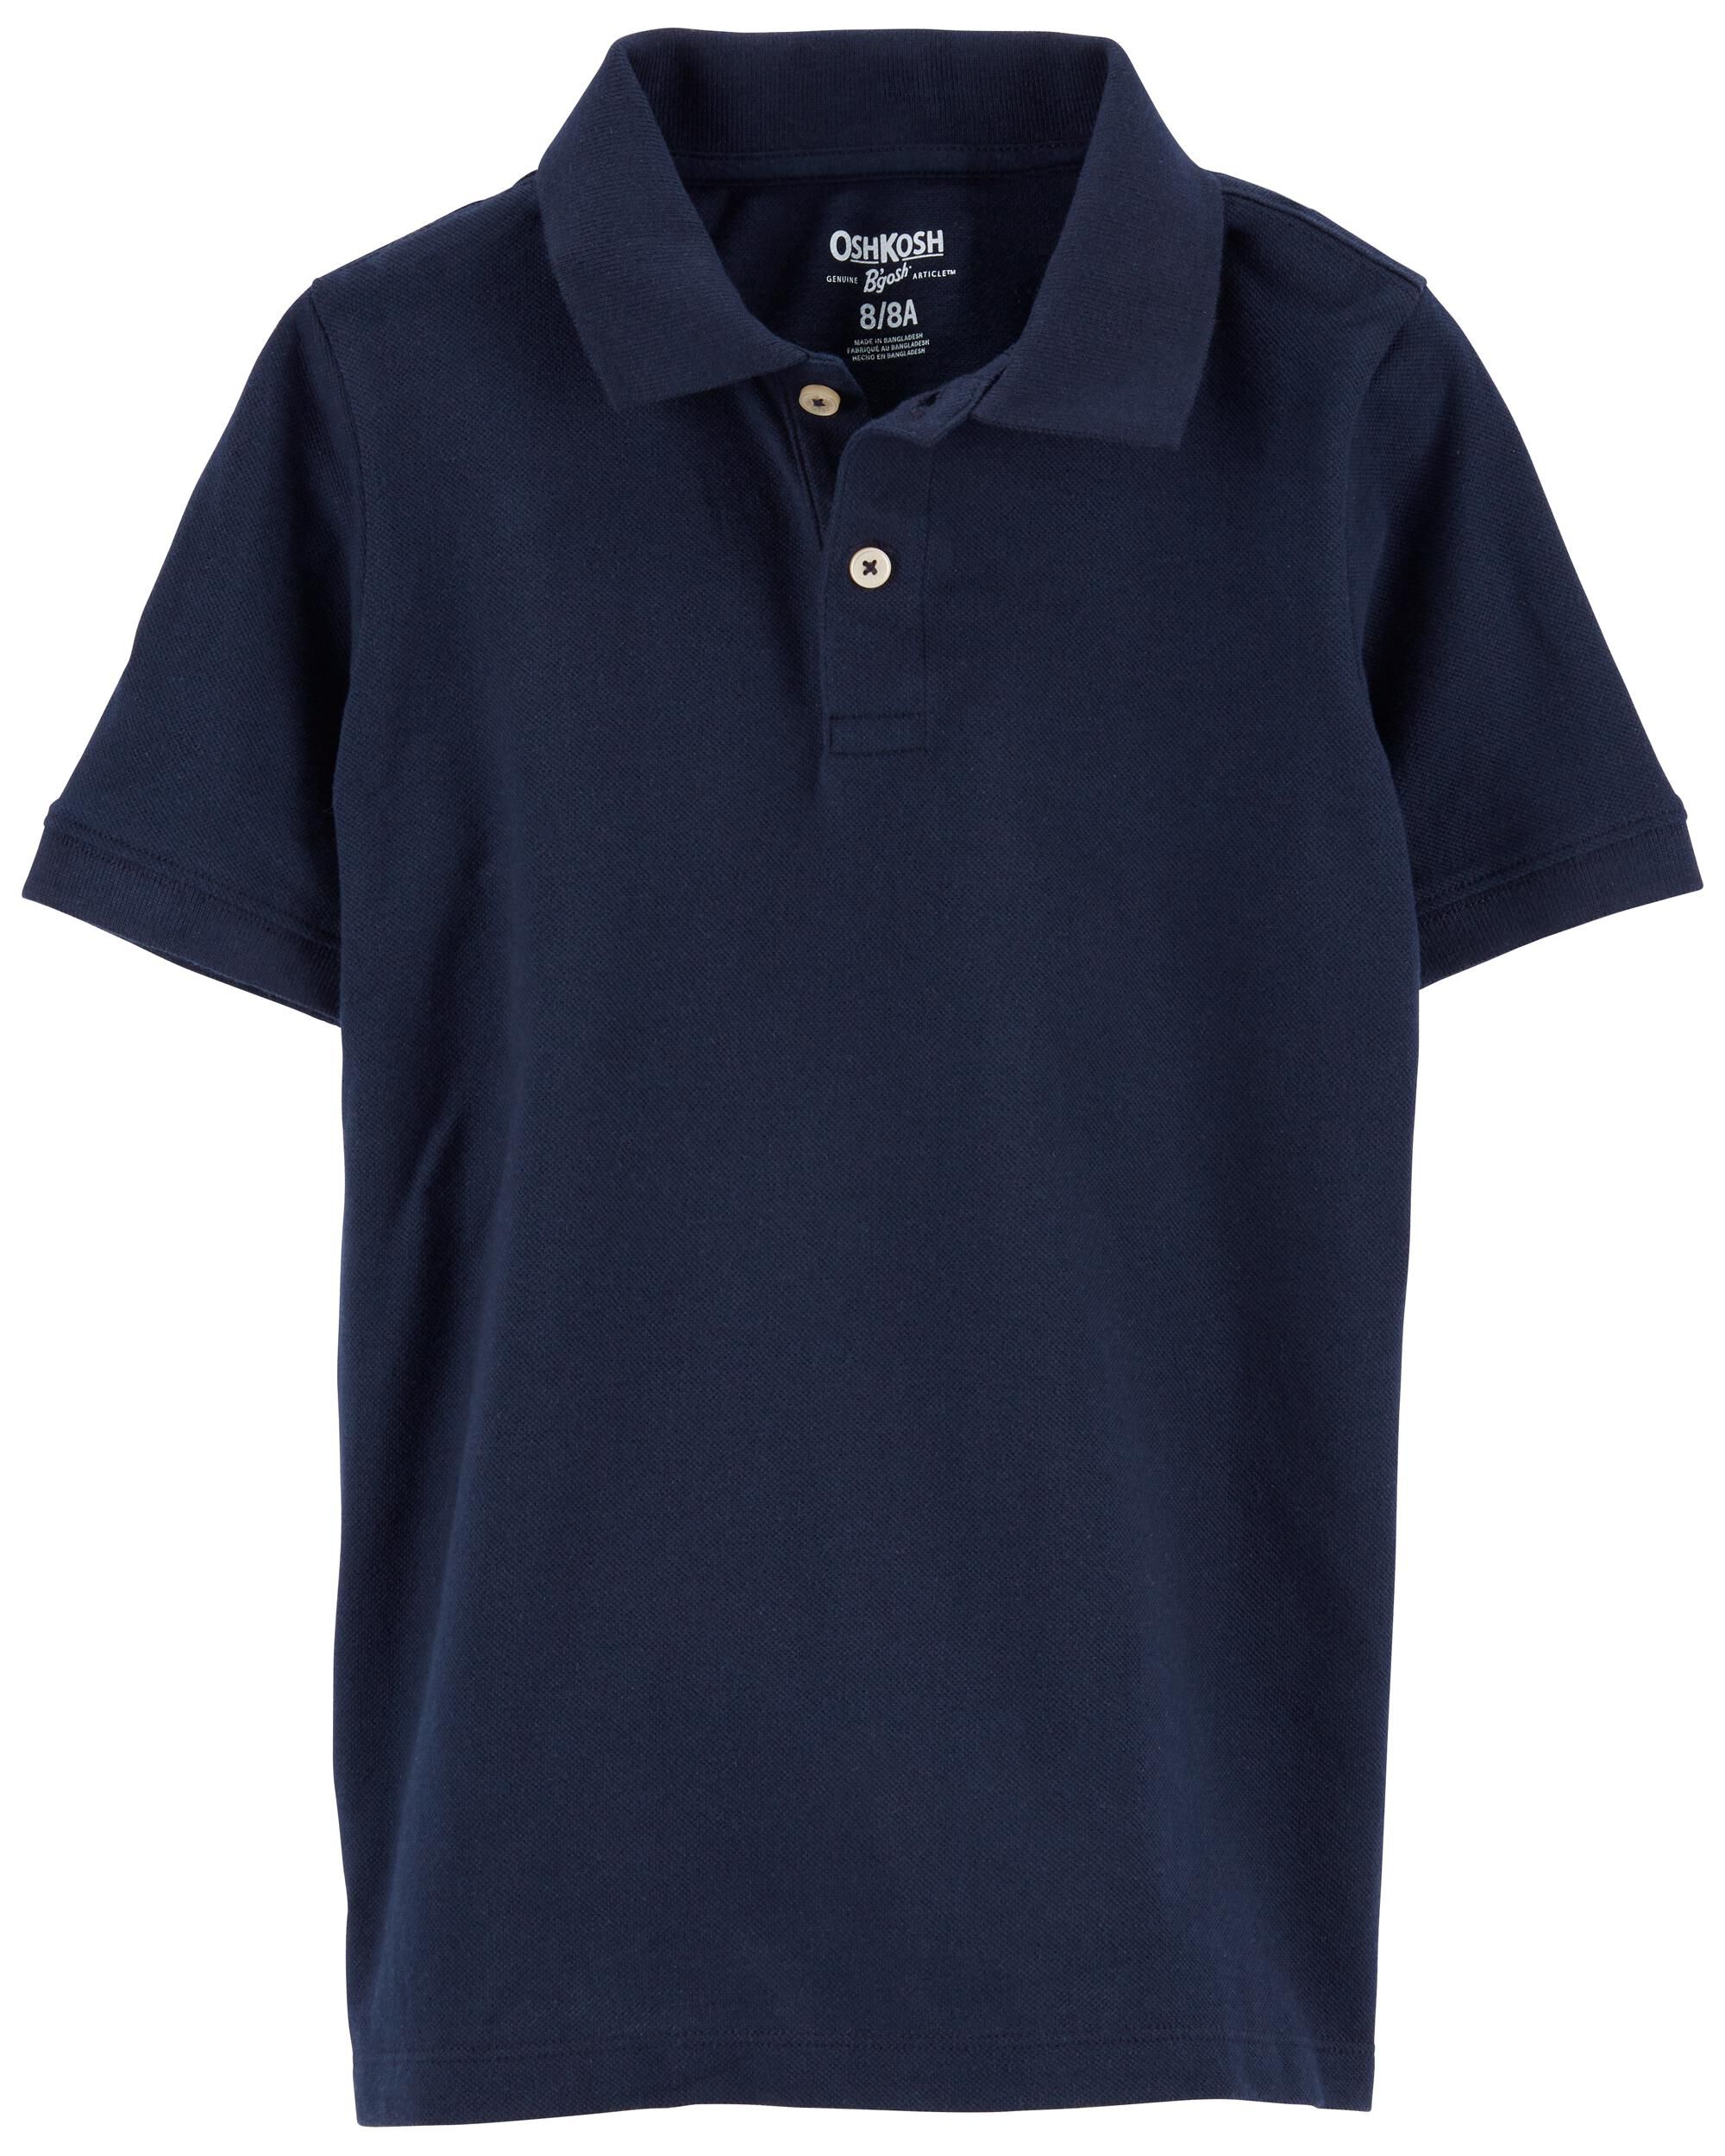 NEW OshKosh Kids Boys Short Sleeve Blue Stripes Shirt Top 9m.12m.18m.24m.36m 